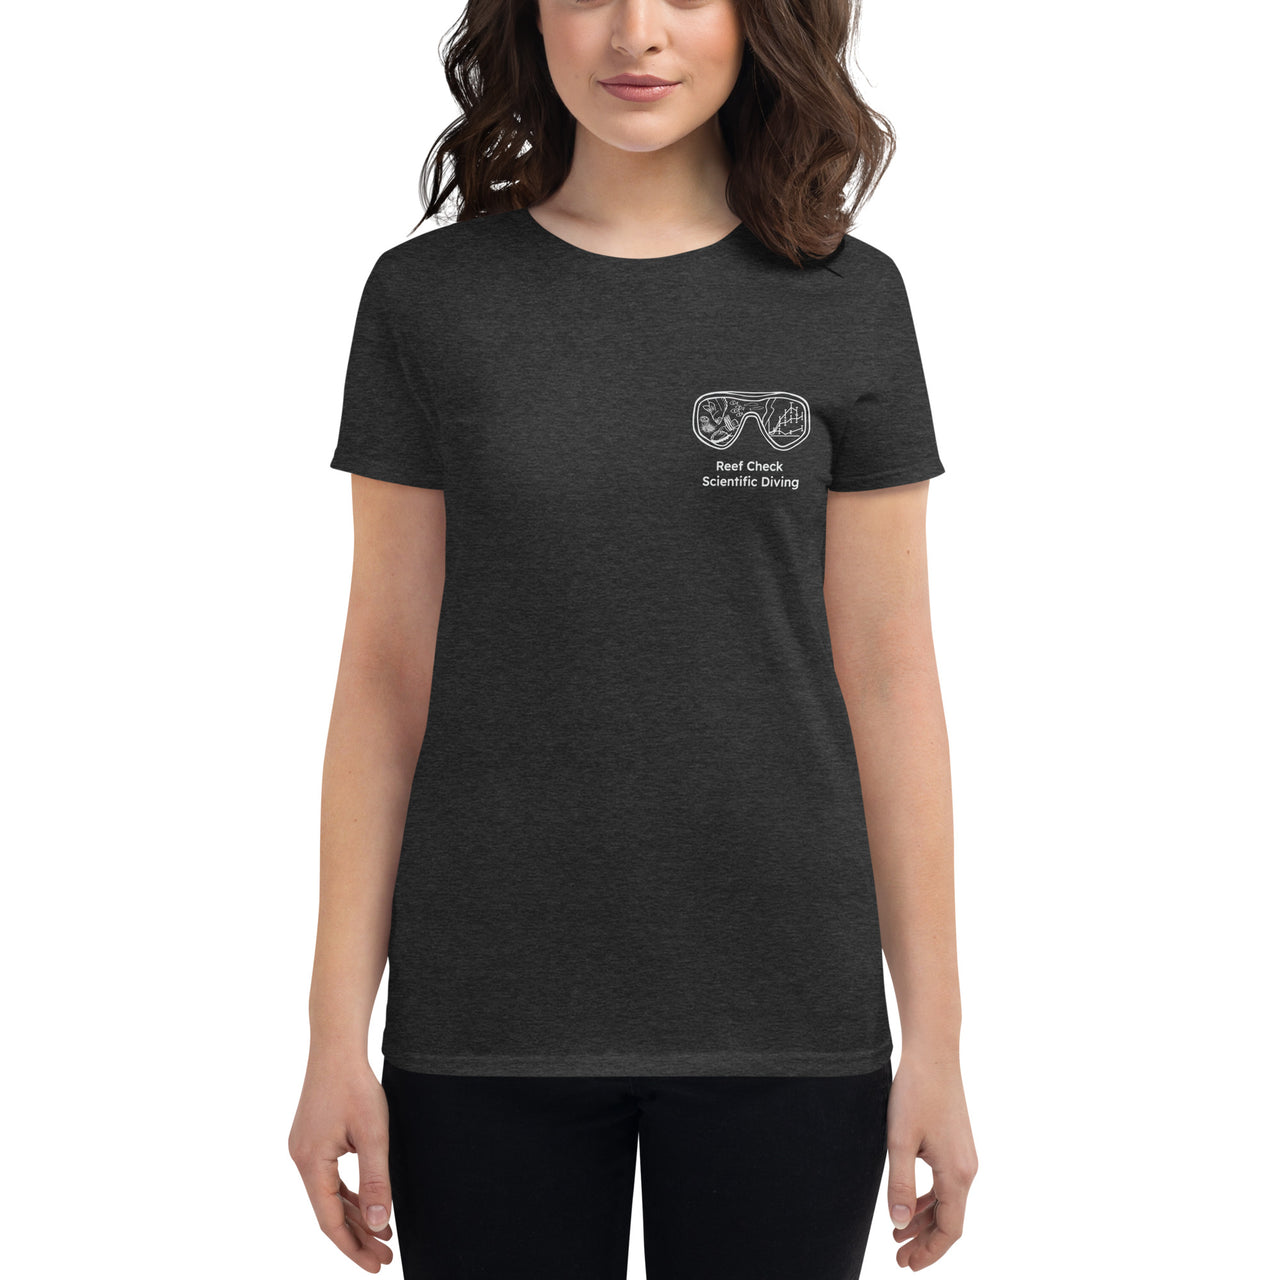 Reef Check- Scientific Diving- Women's short sleeve t-shirt